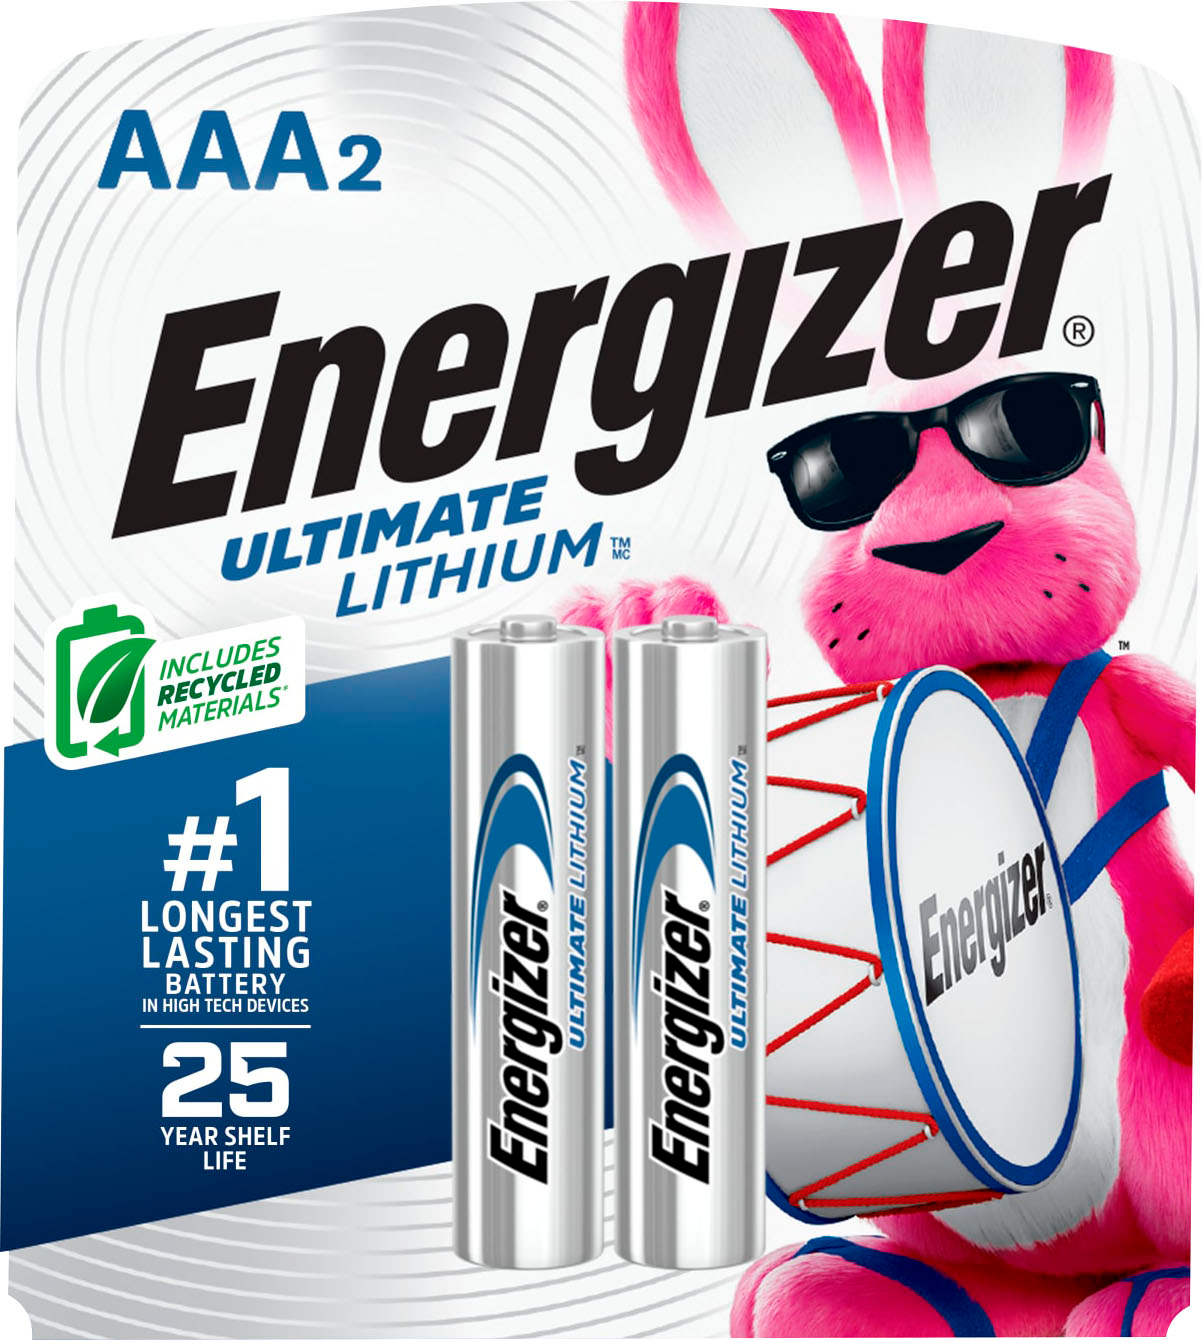 Energizer Ultimate Lithium 123 Photo Batteries - 2pk Lithium Battery